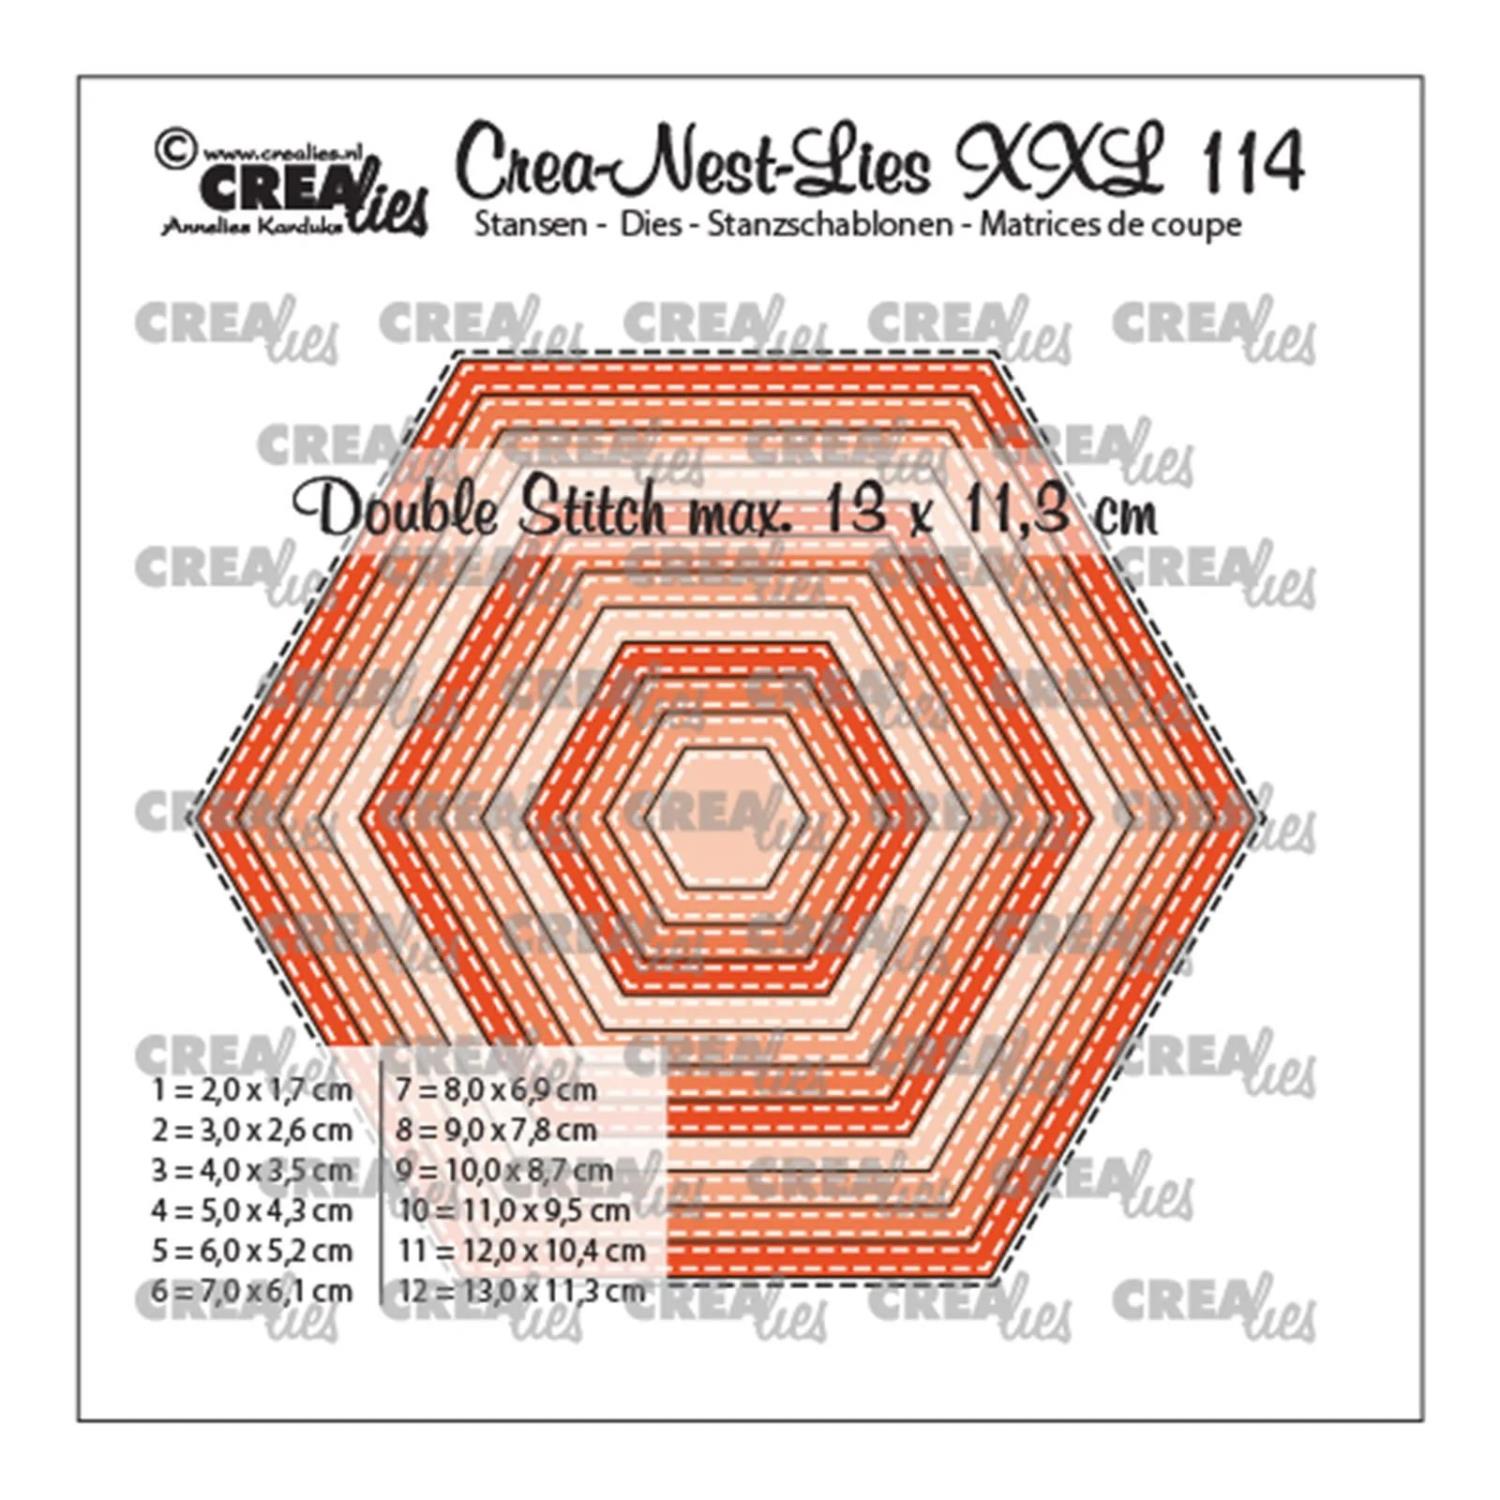 Crealies-  Crealies • Crea-Nest-Lies XXL cutting die Hexagons with double stitch